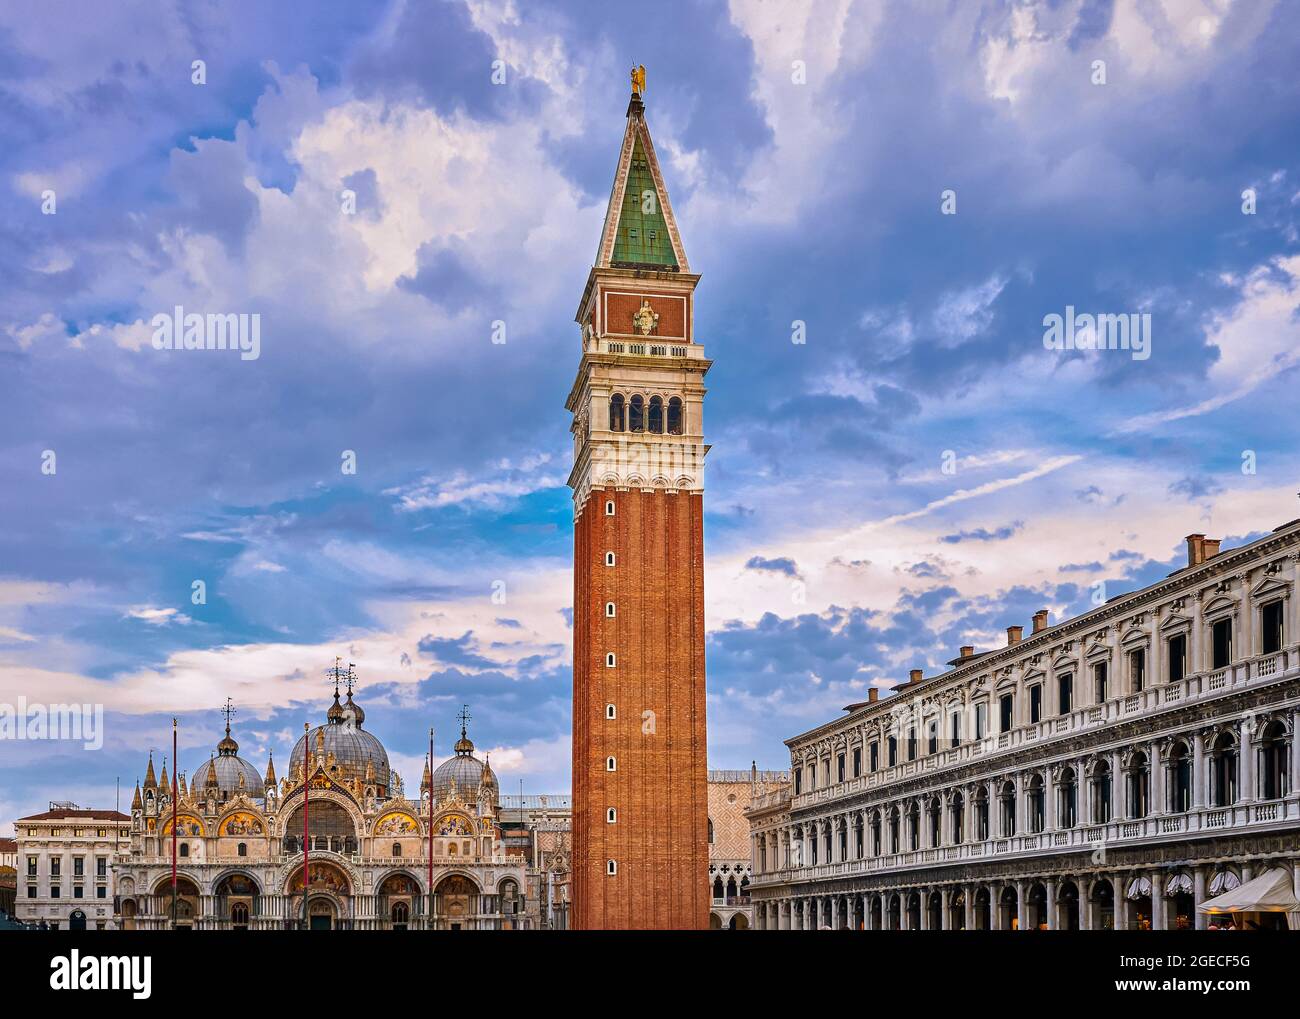 View of St Mark's square or piazza di San Marco, Venice, Italy in sundown on cloudy day. Campanile, St Mark's Basilica, Procurate Vecchie building Stock Photo